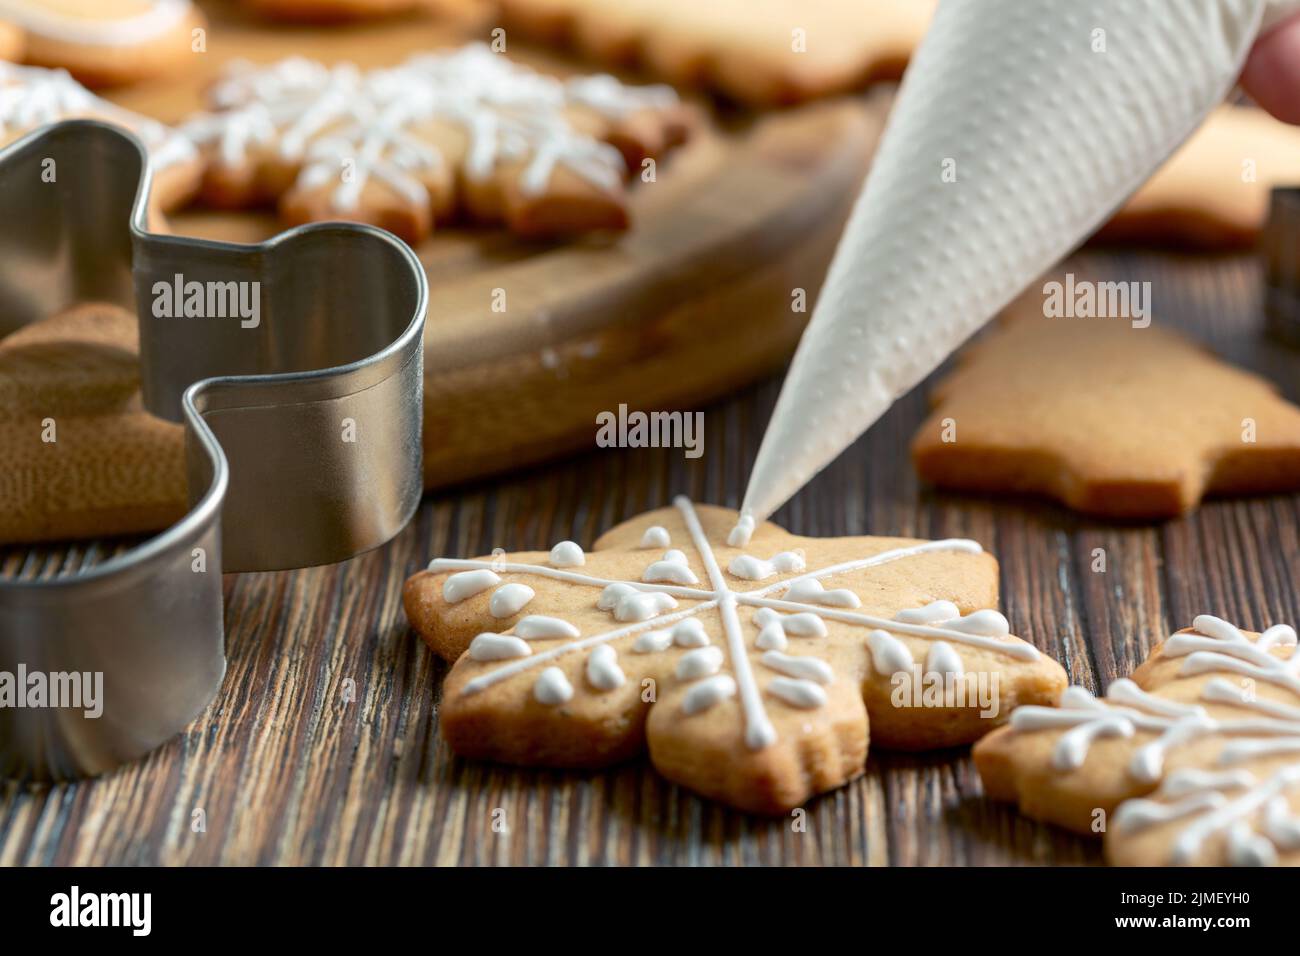 Making Christmas cookies. Stock Photo